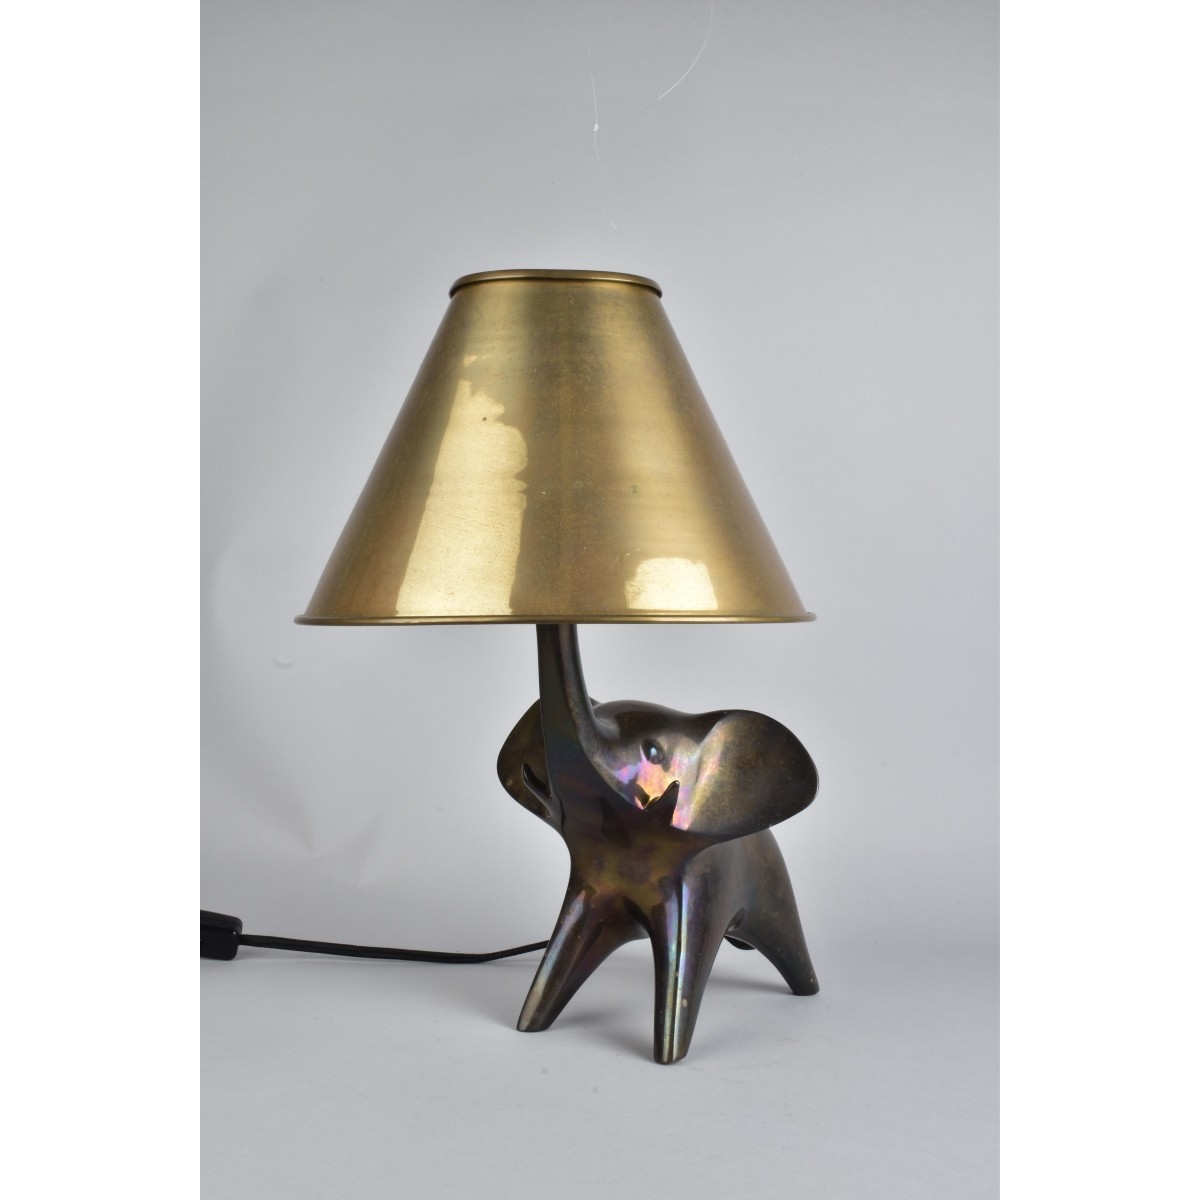 Jonathan Adler Bronze Presented as a Lamp